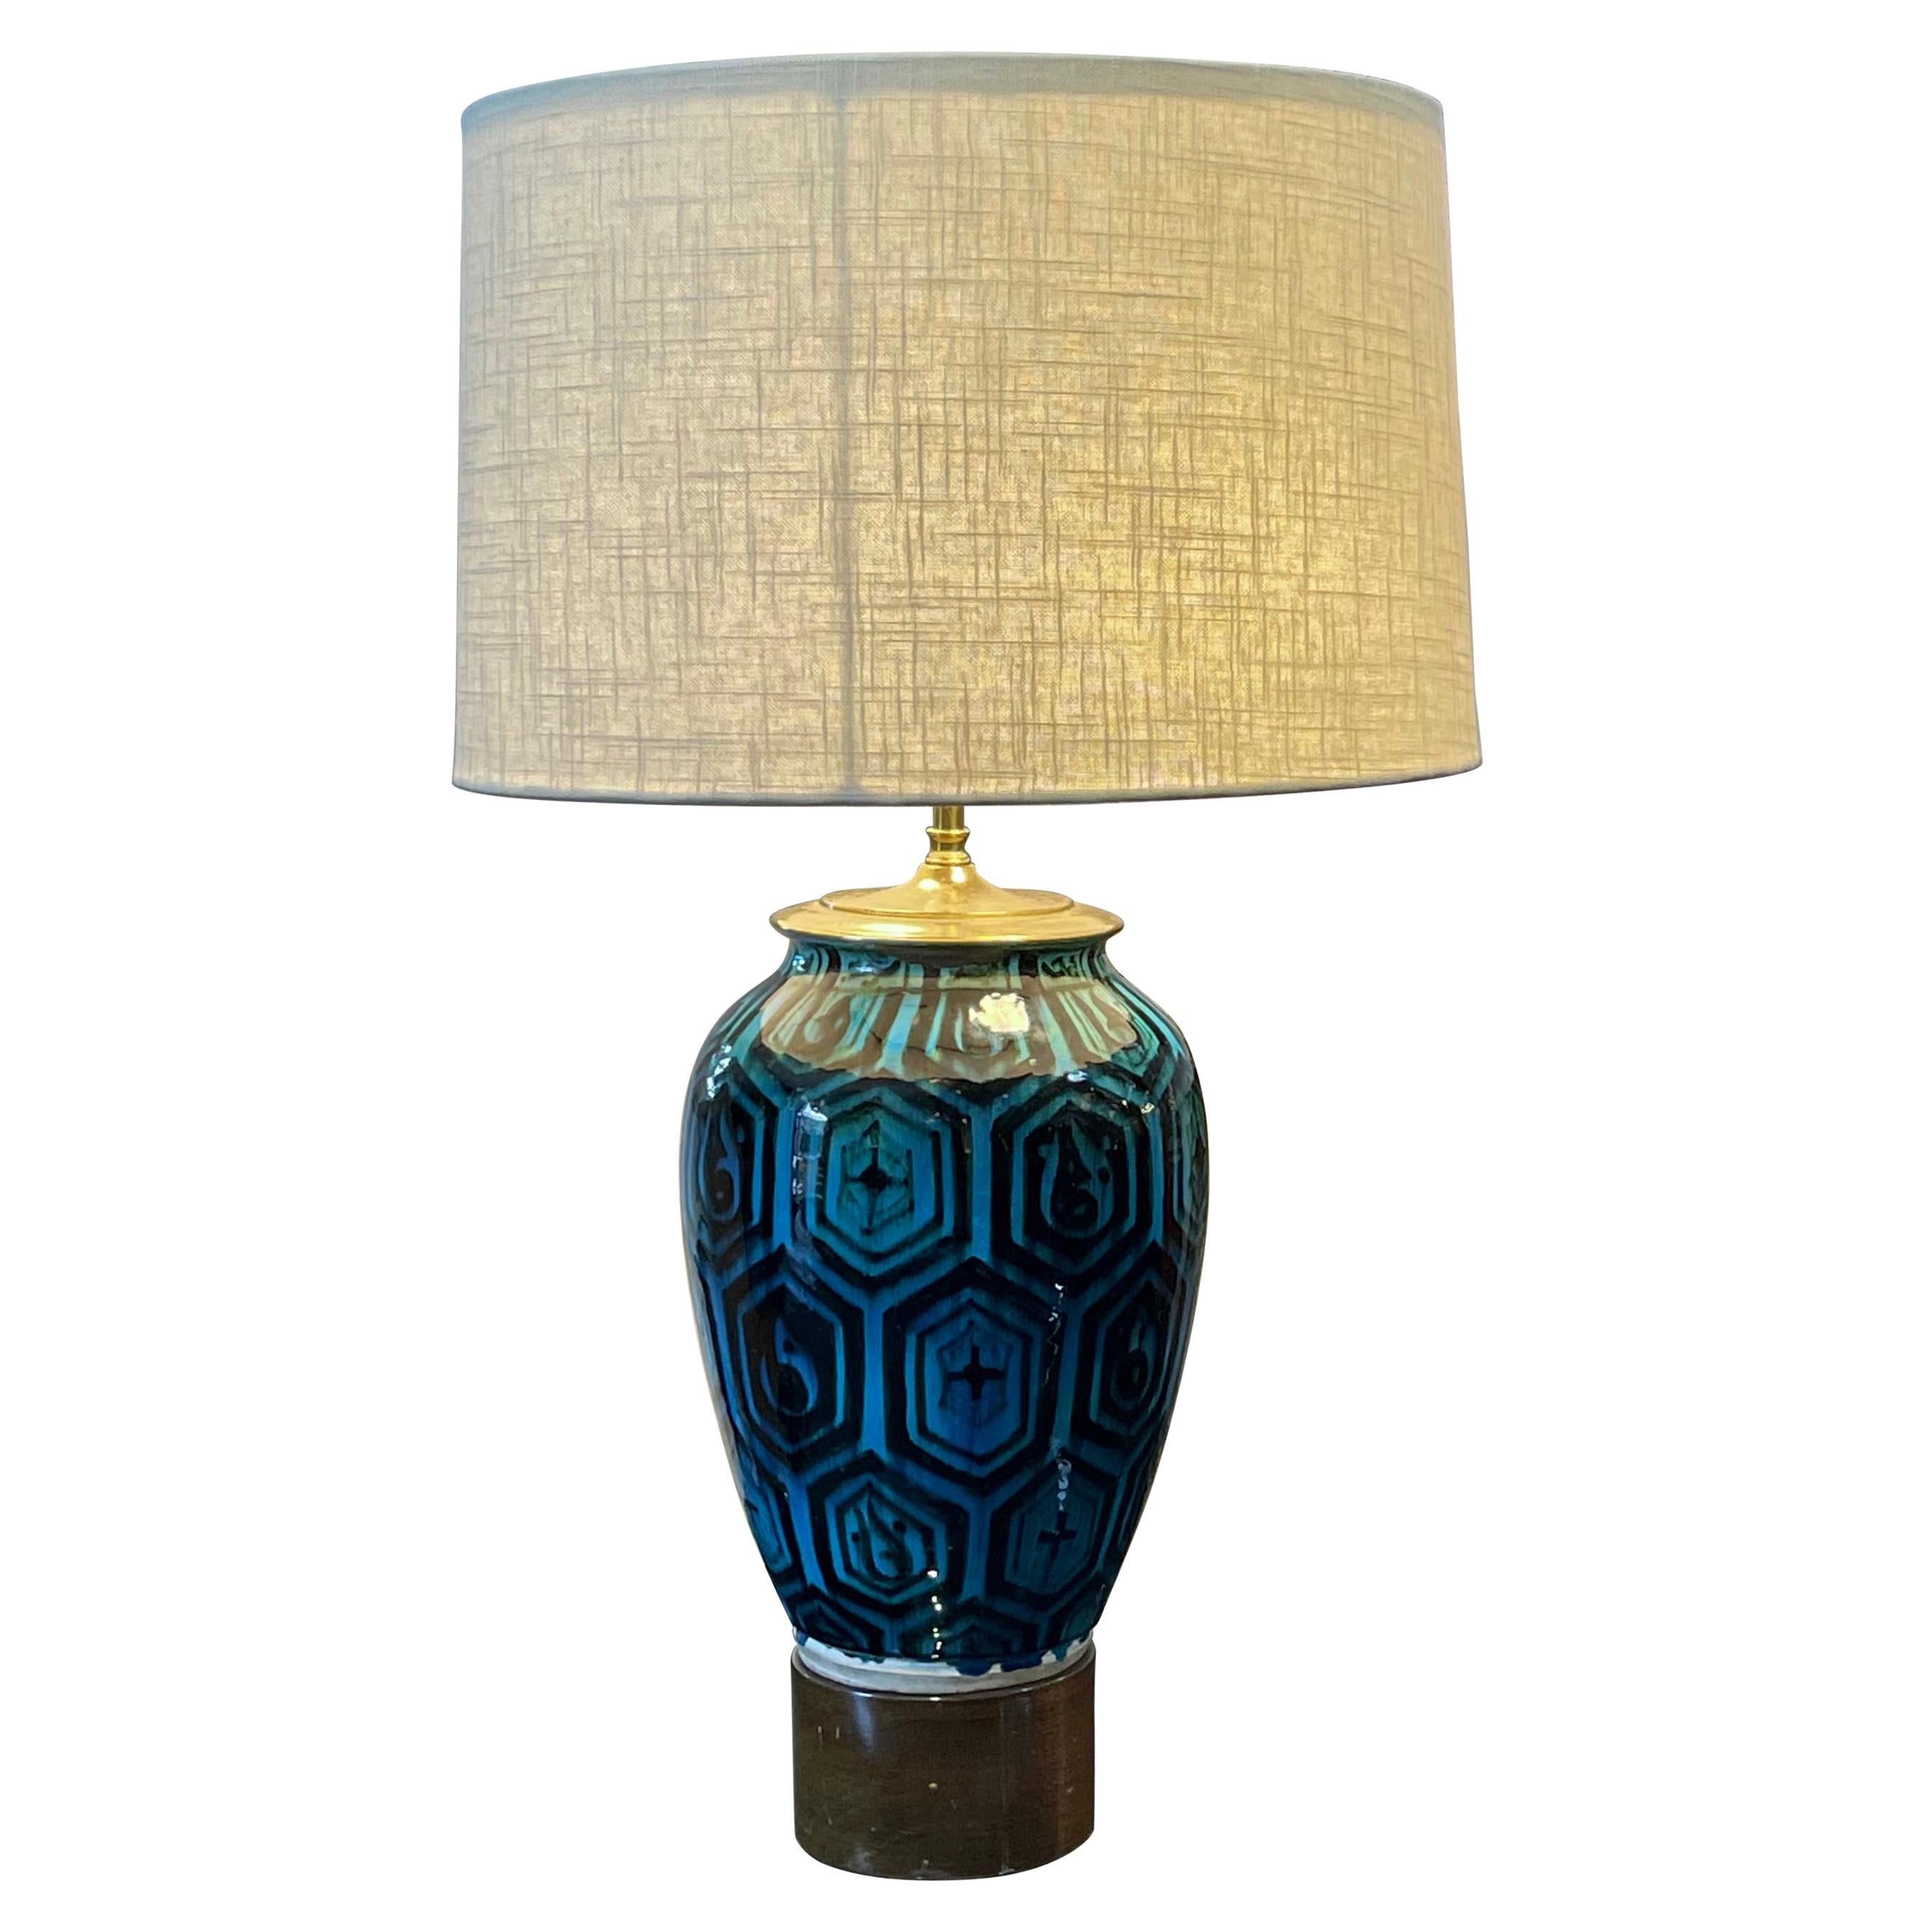 William Billy Haines Glazed Ceramic Table Lamp